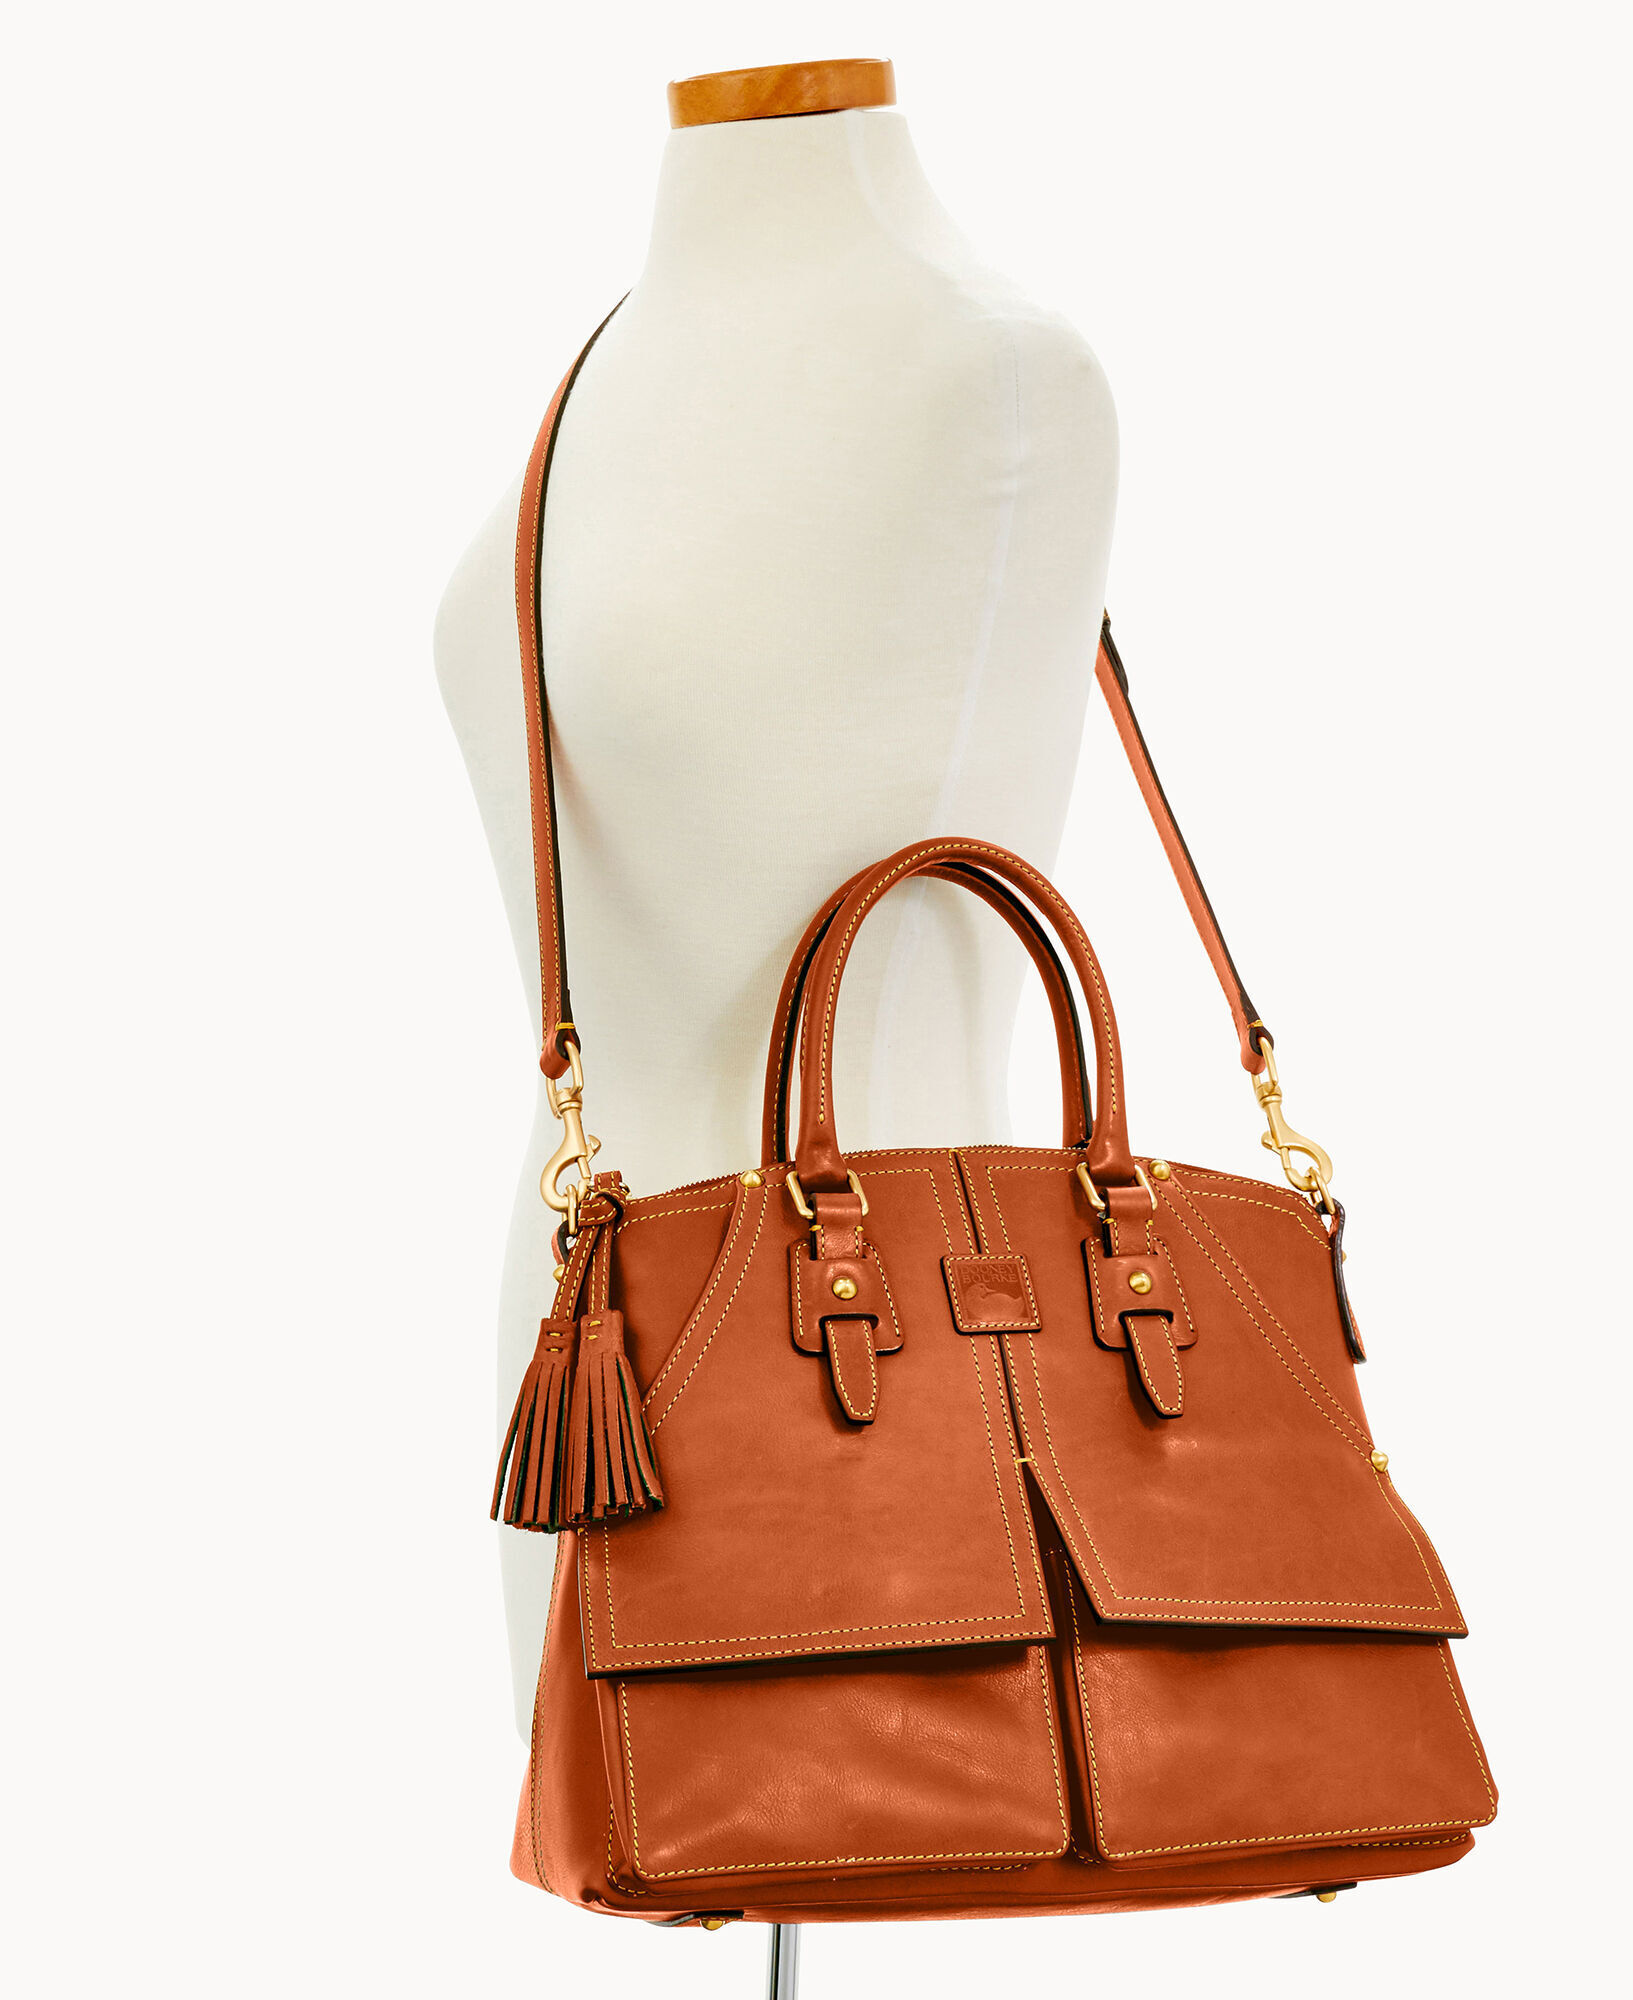 Dooney & Bourke Florentine Leather Tasseled Satchel Bag